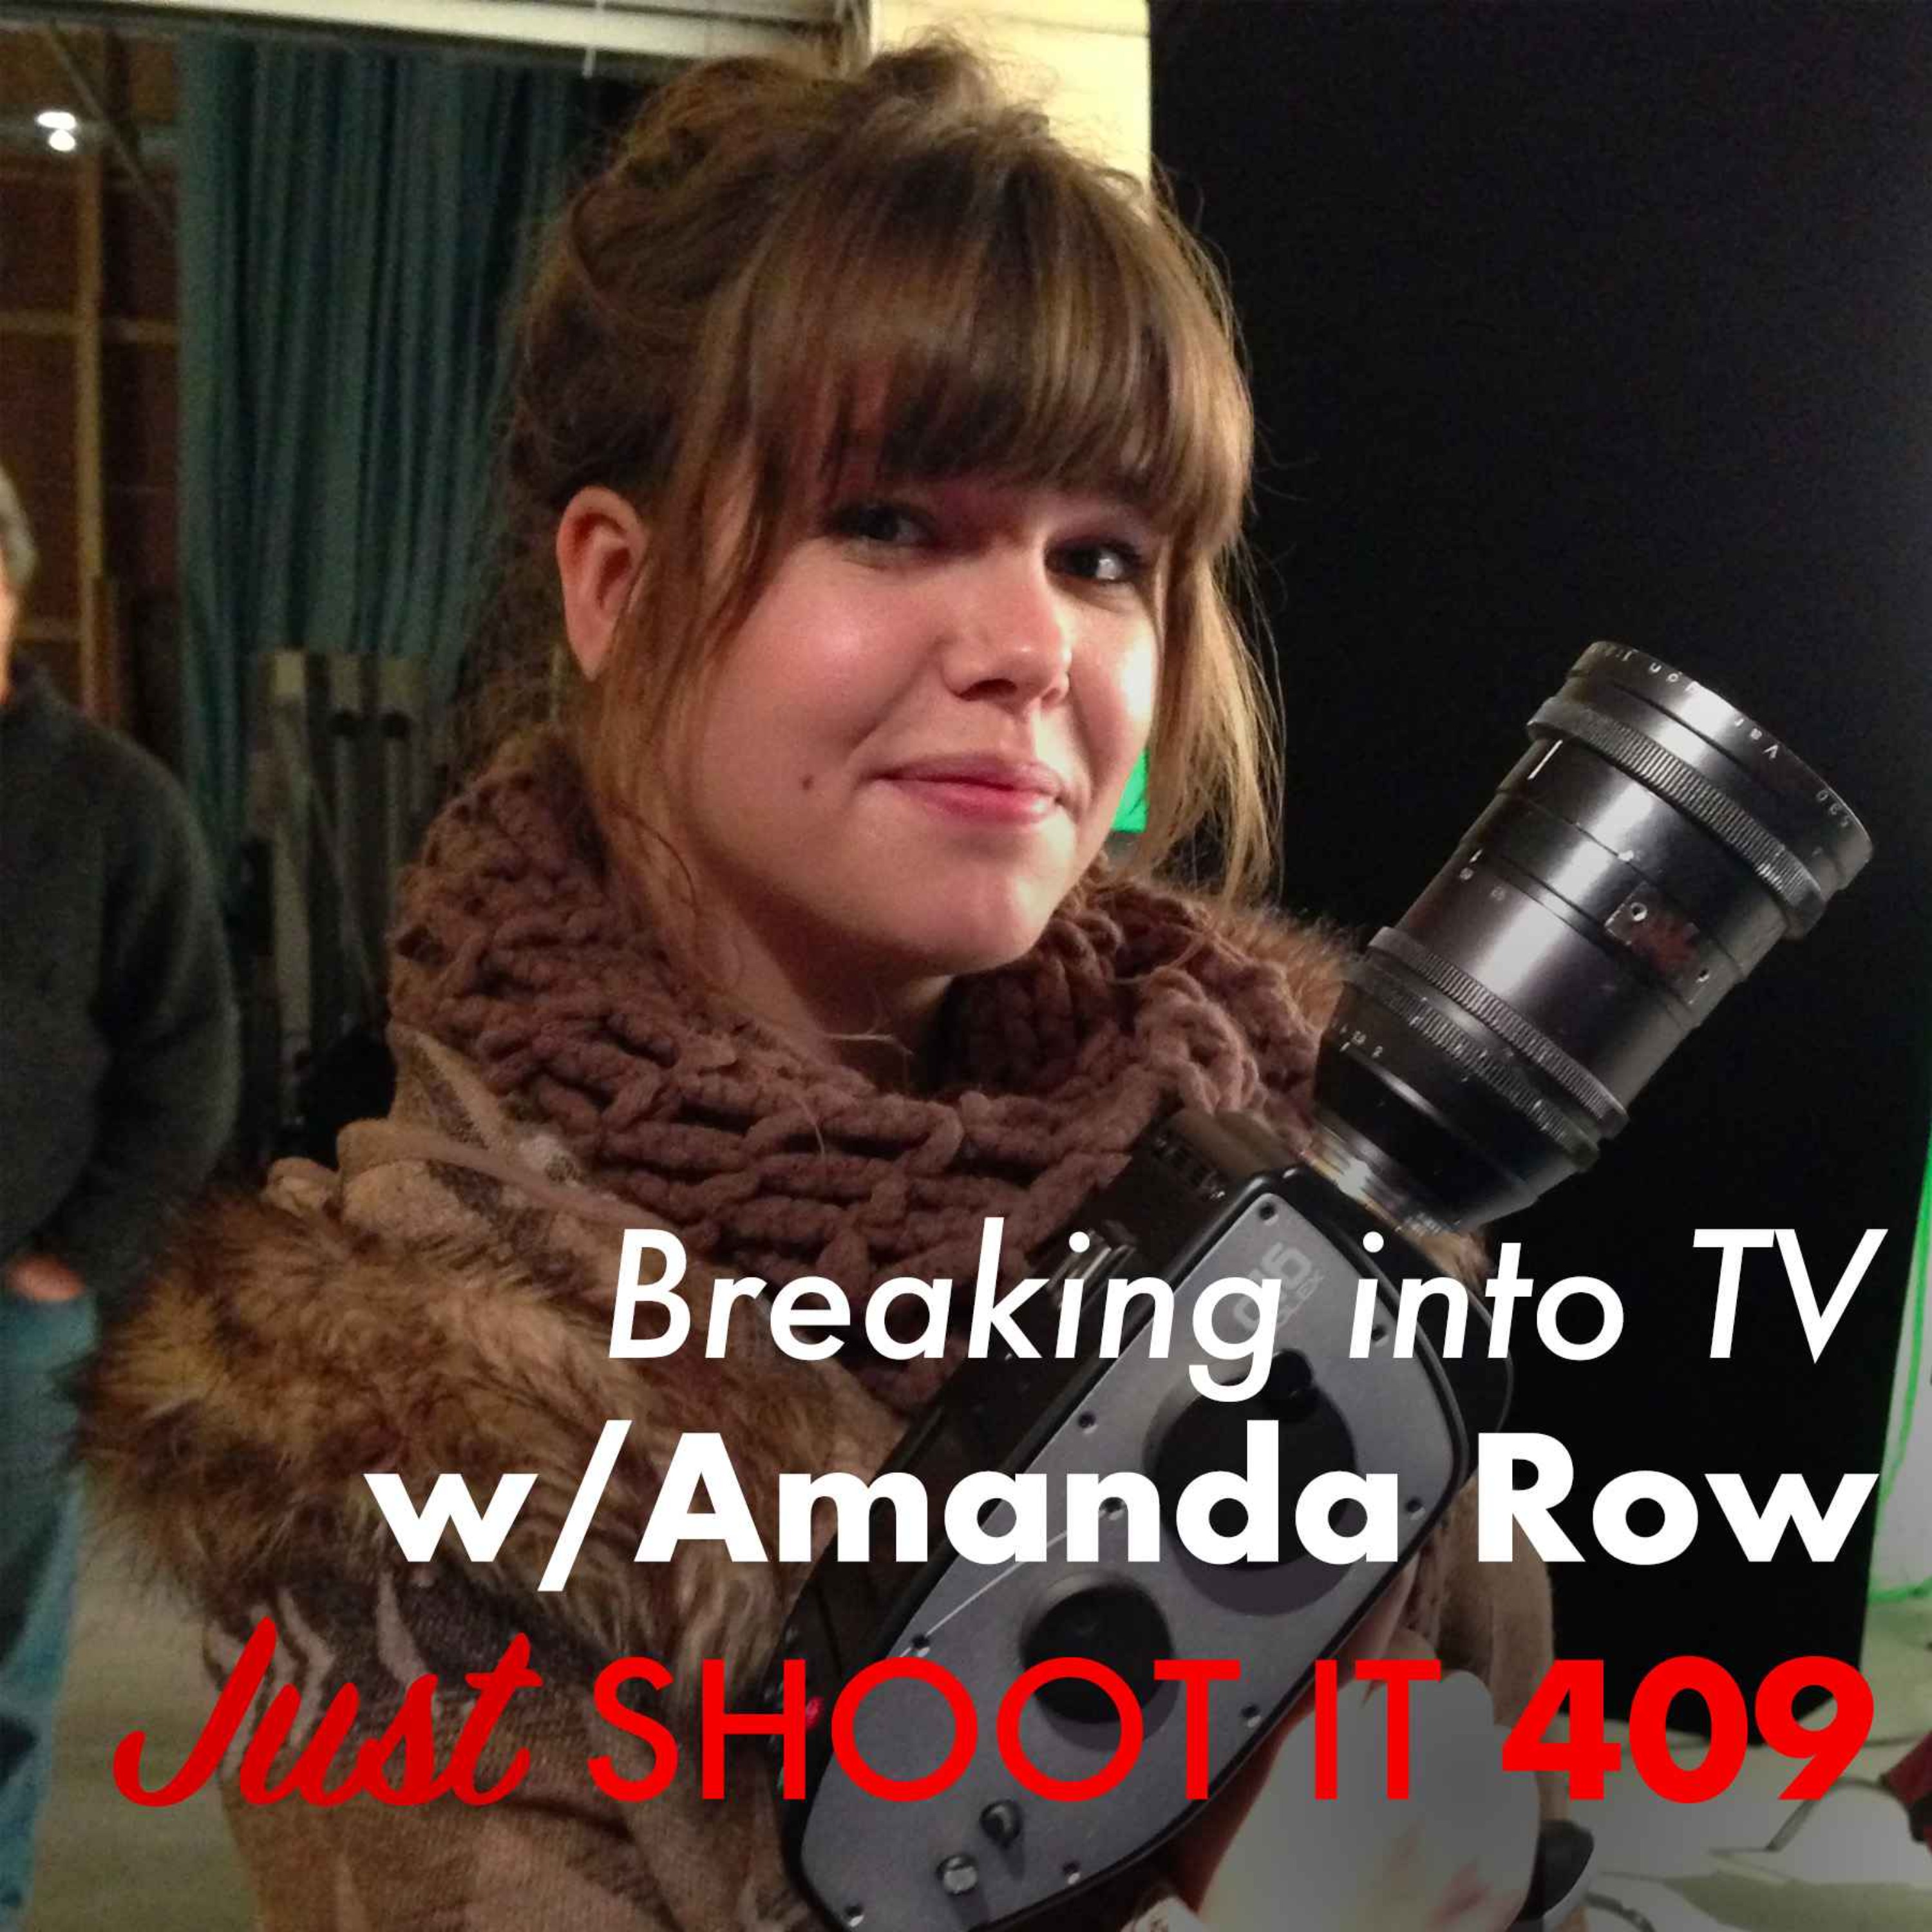 Breaking into TV w/Director Amanda Row - Just Shoot It 409